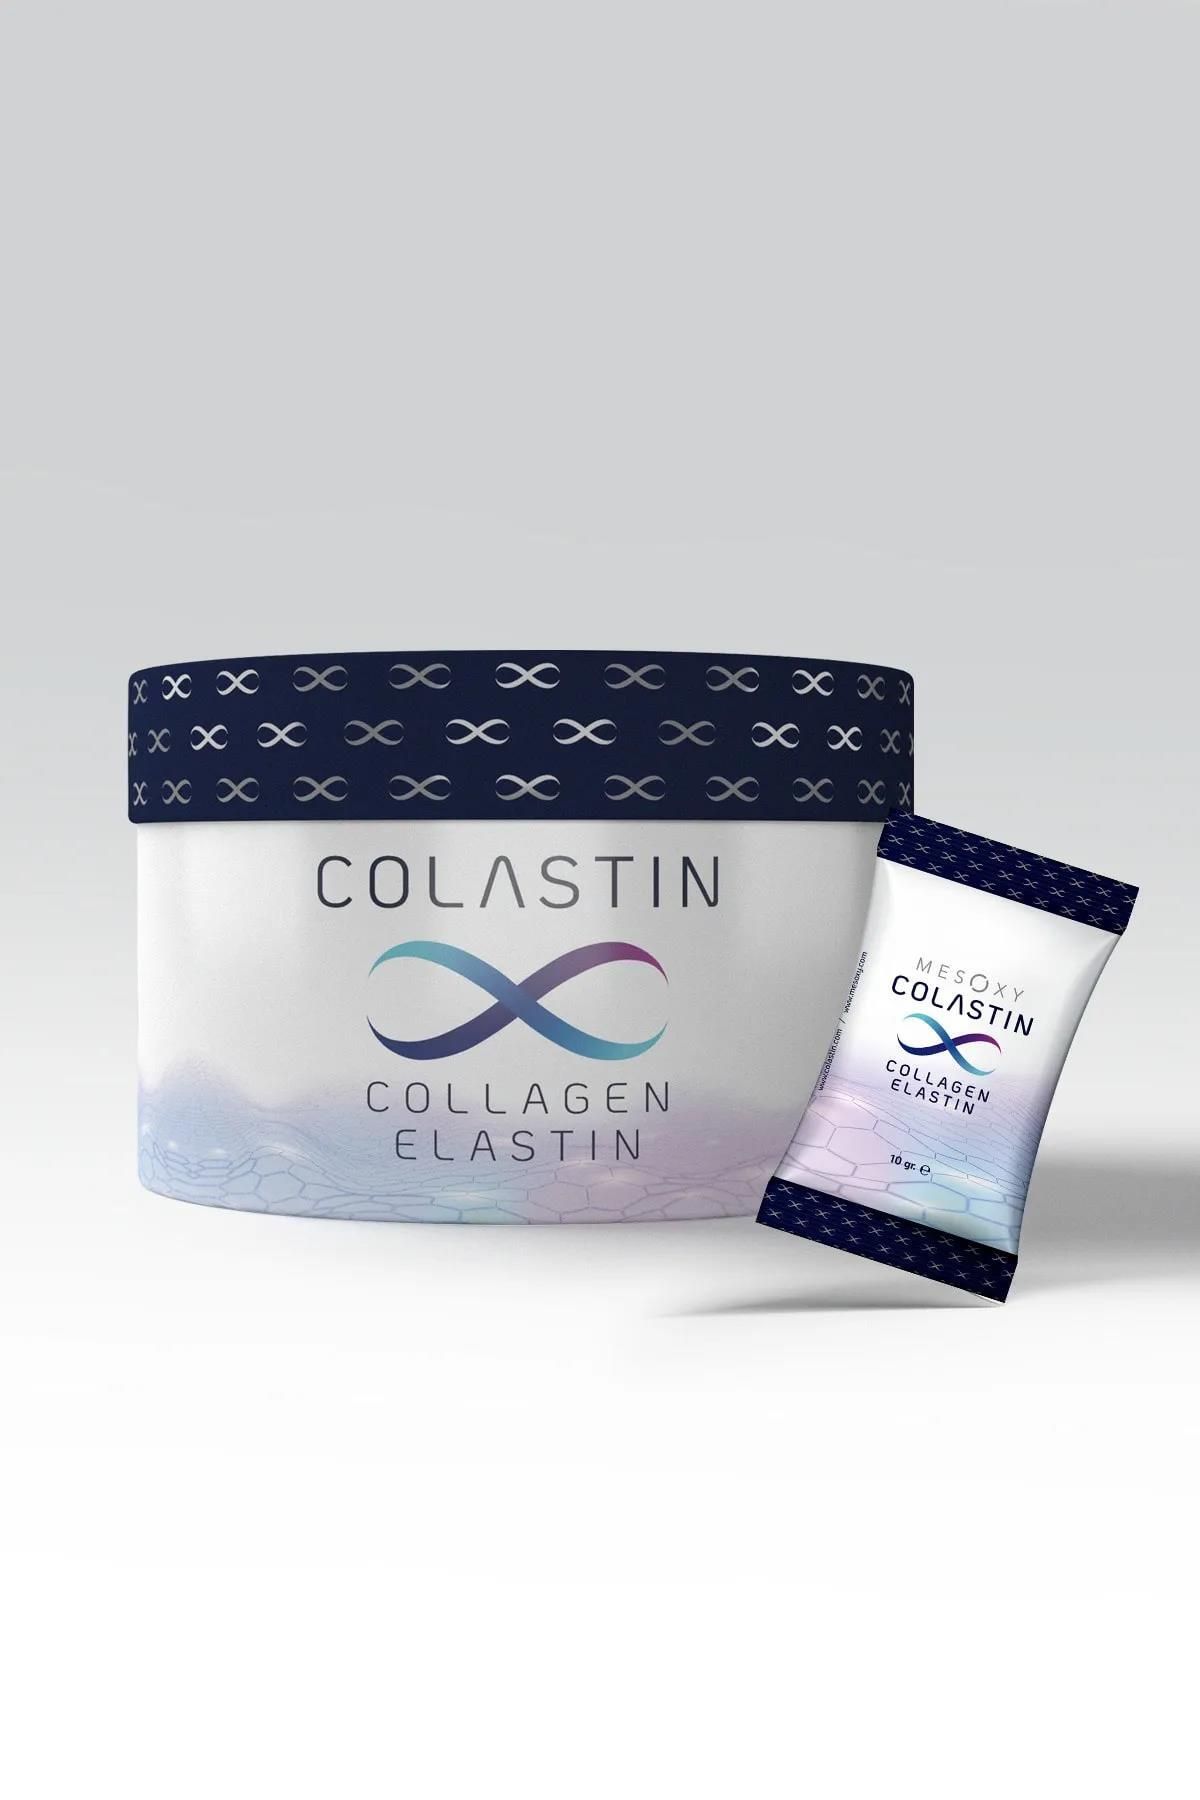 Colastin Collagen Elastin 14 Şase Kolajen